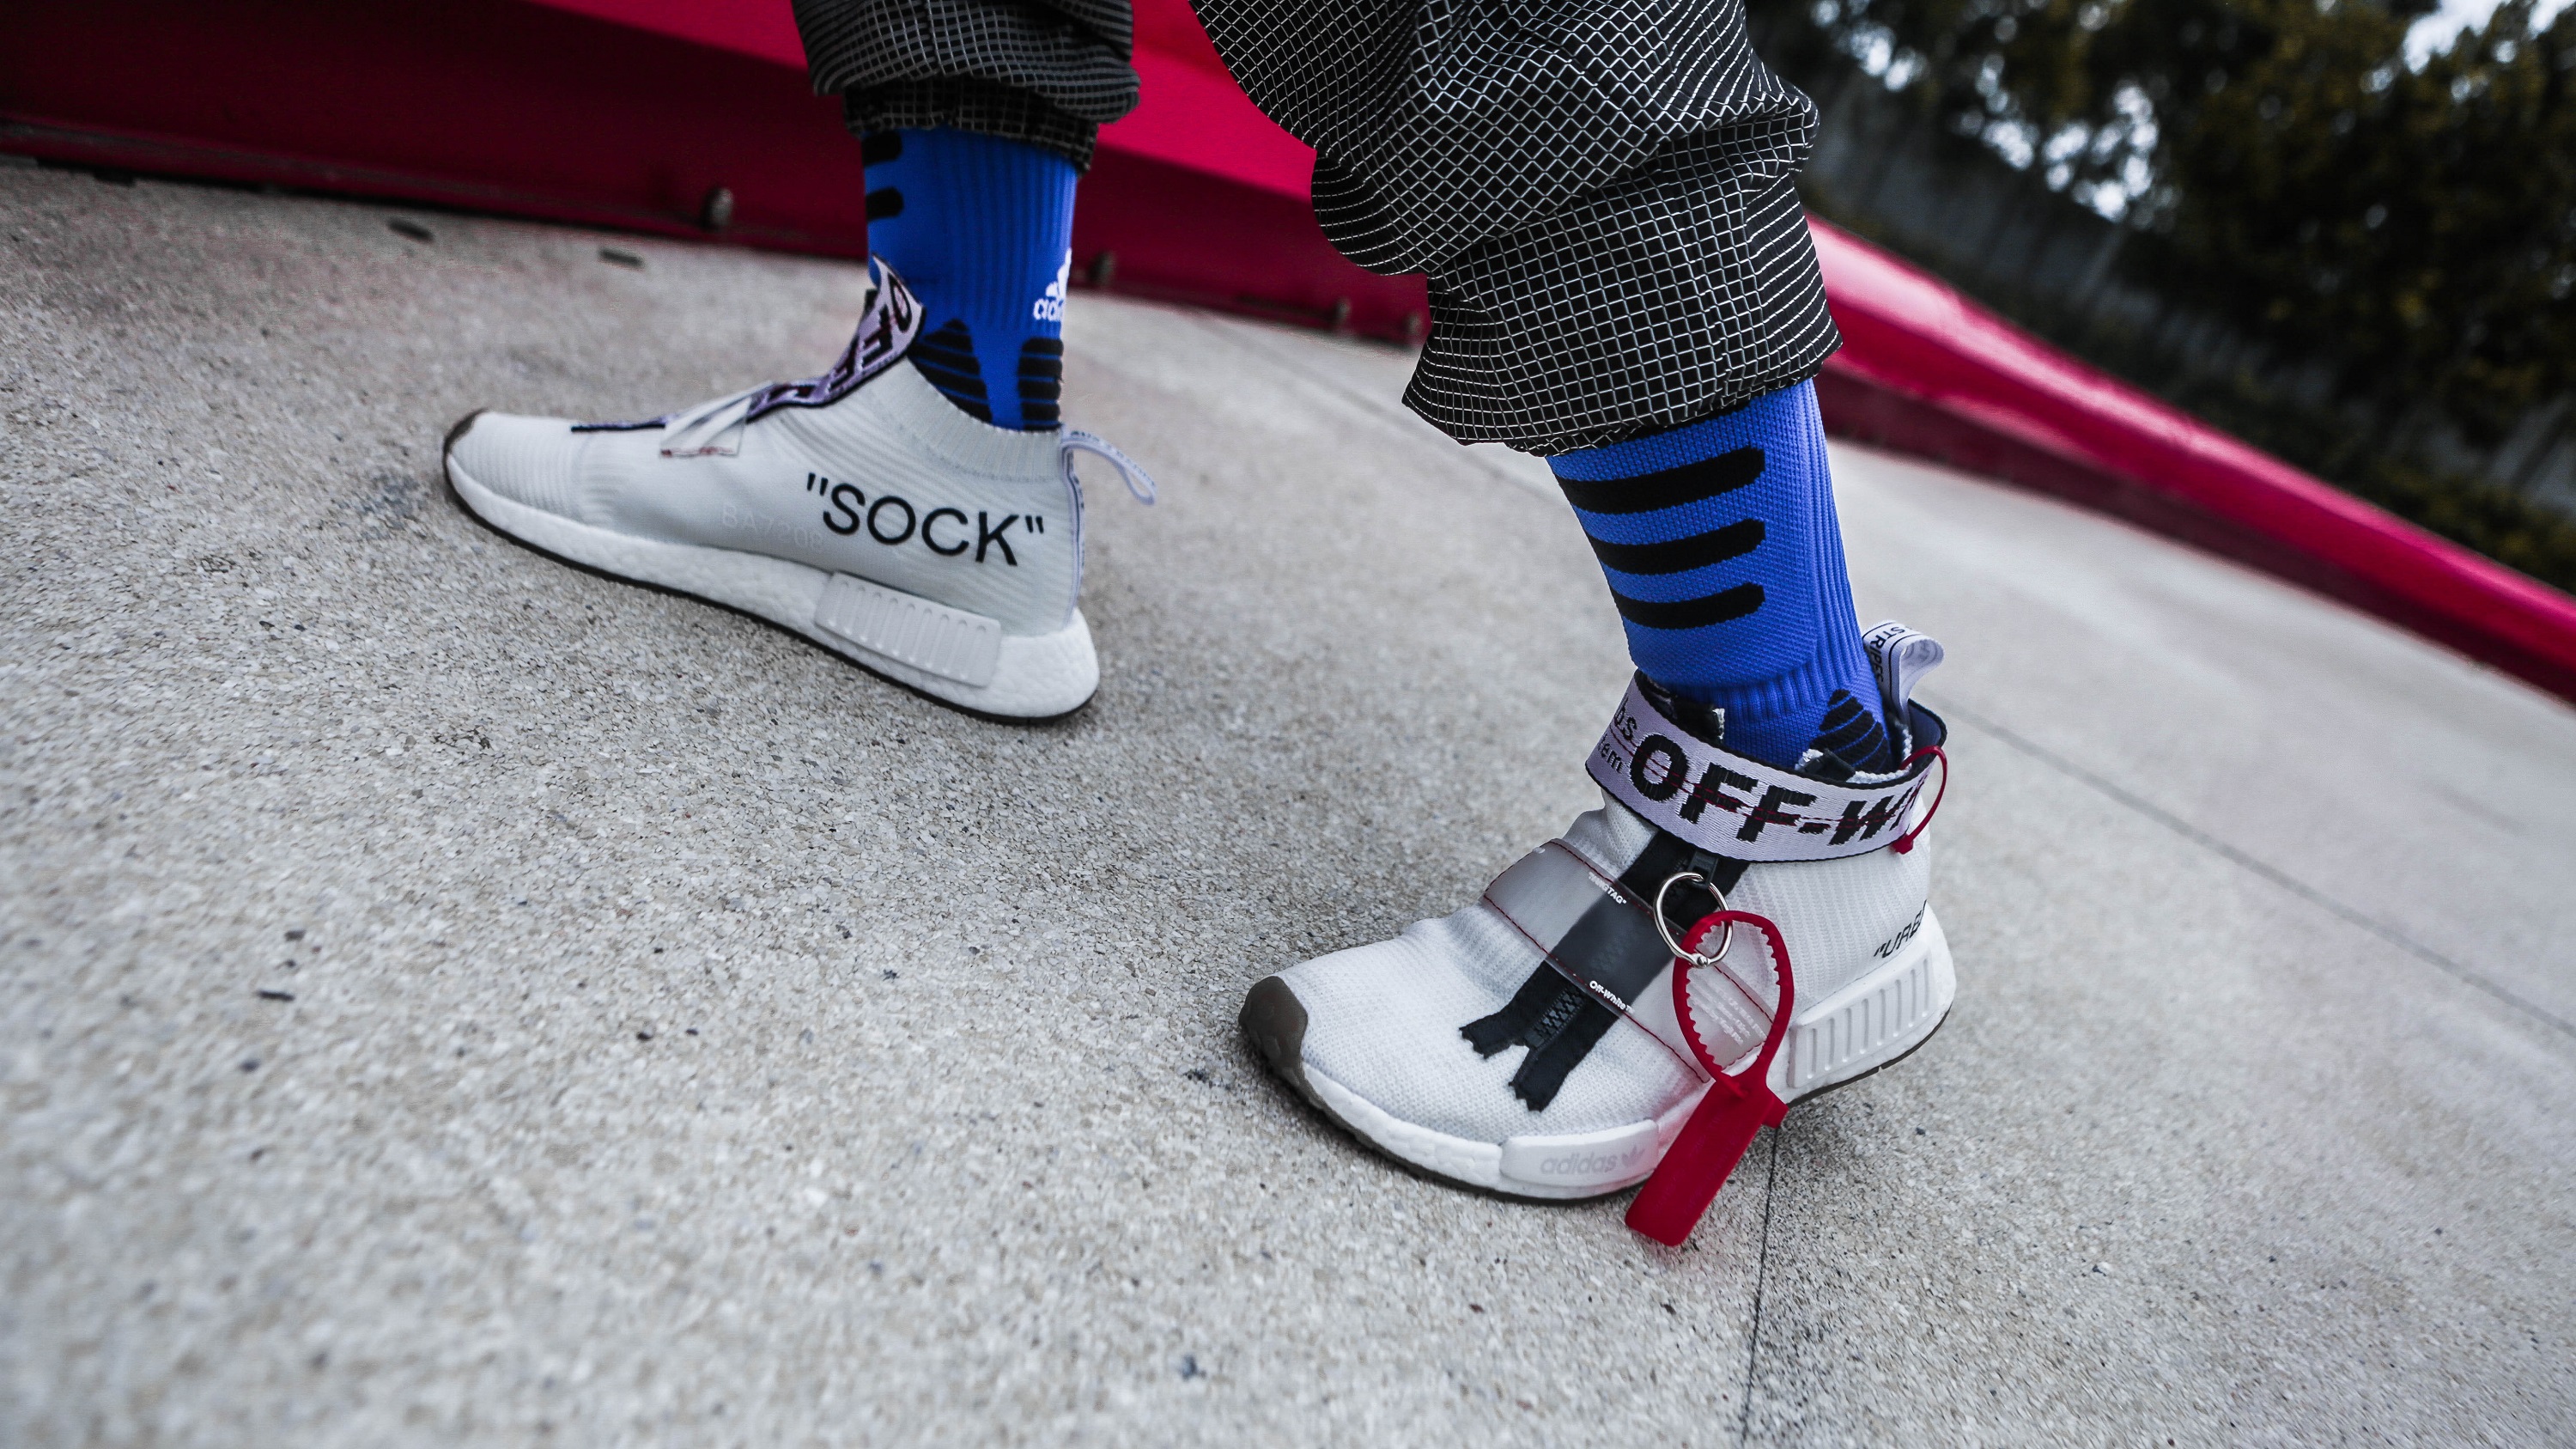 Adidas NMD City Sock White Black KicksOnFire.m